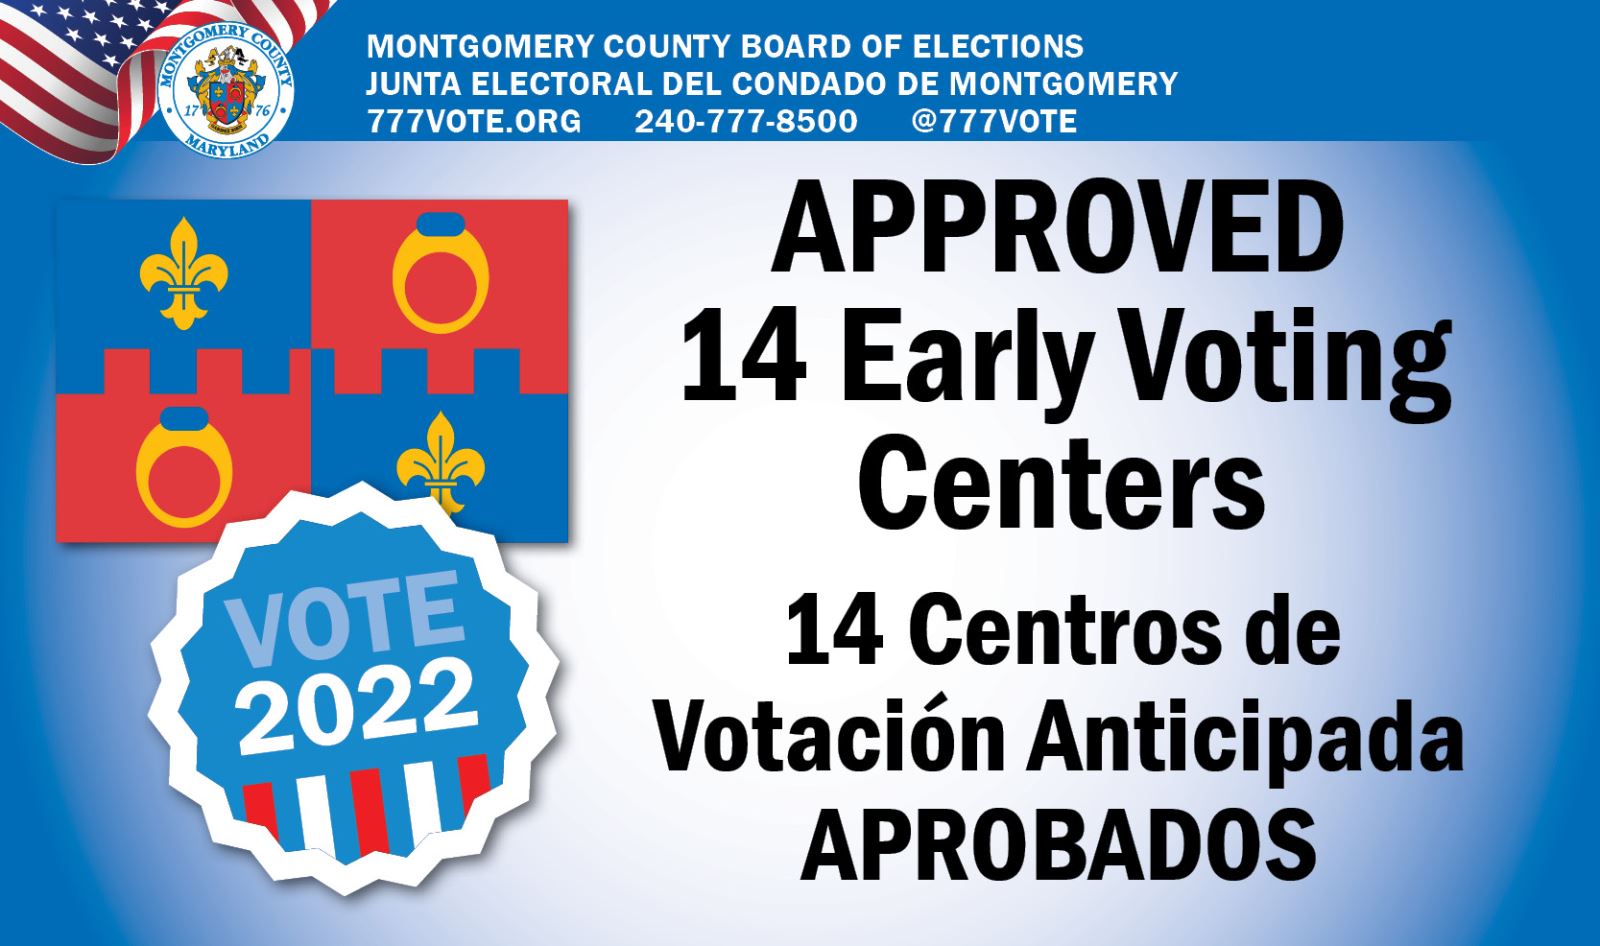 2022 Election - Recommended 14 Early Voting Centers - Se Recomiendan 14 Centros de Votacion Anticipada.